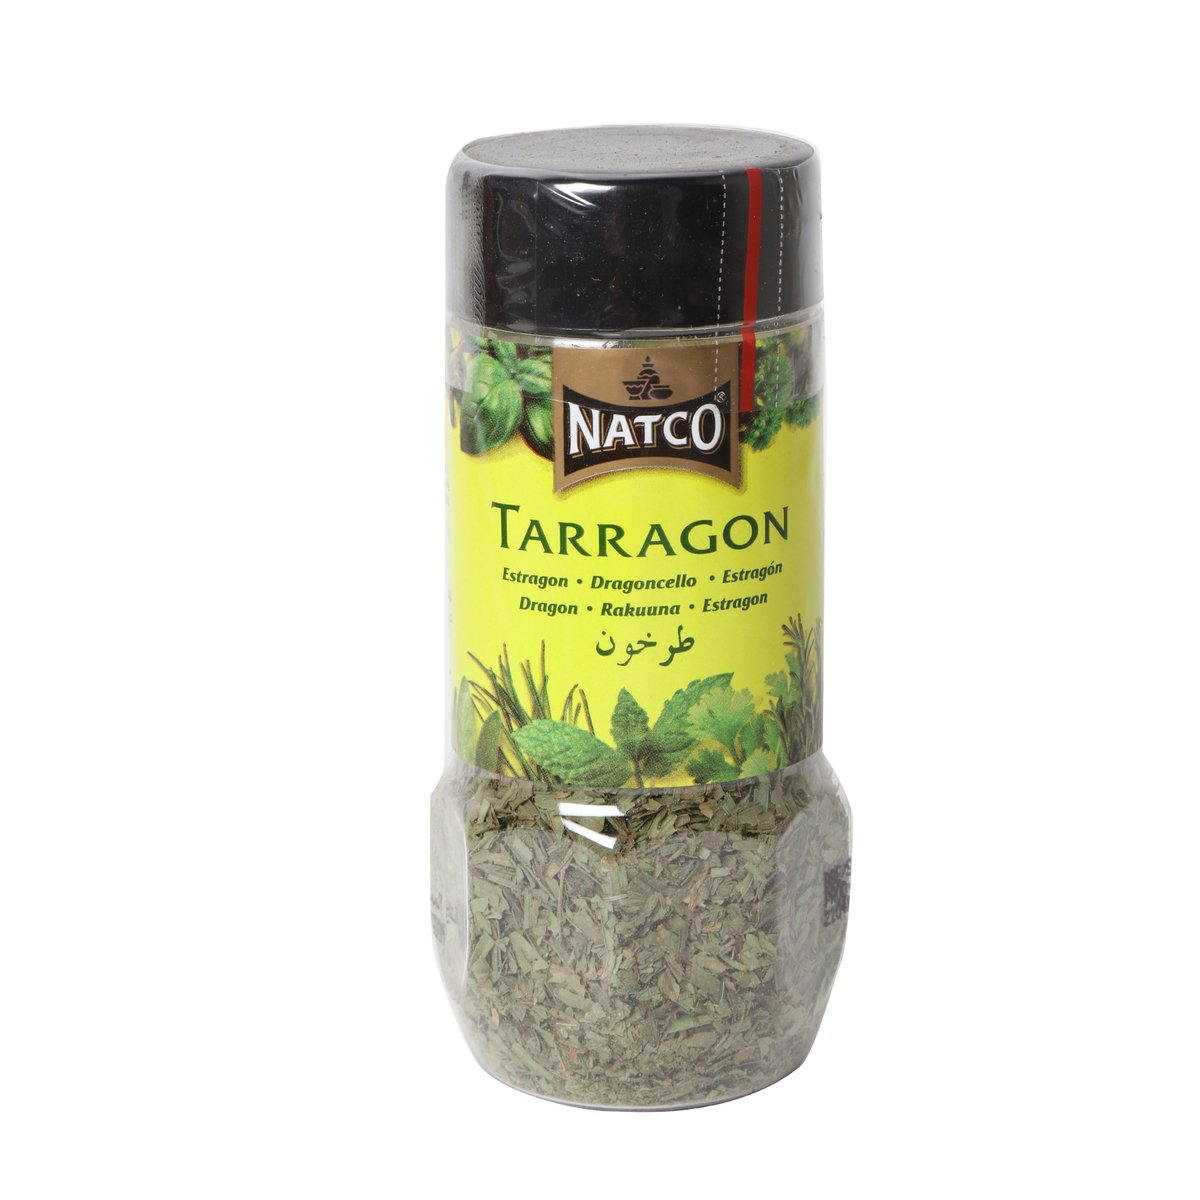 Natco Tarragon 25 g